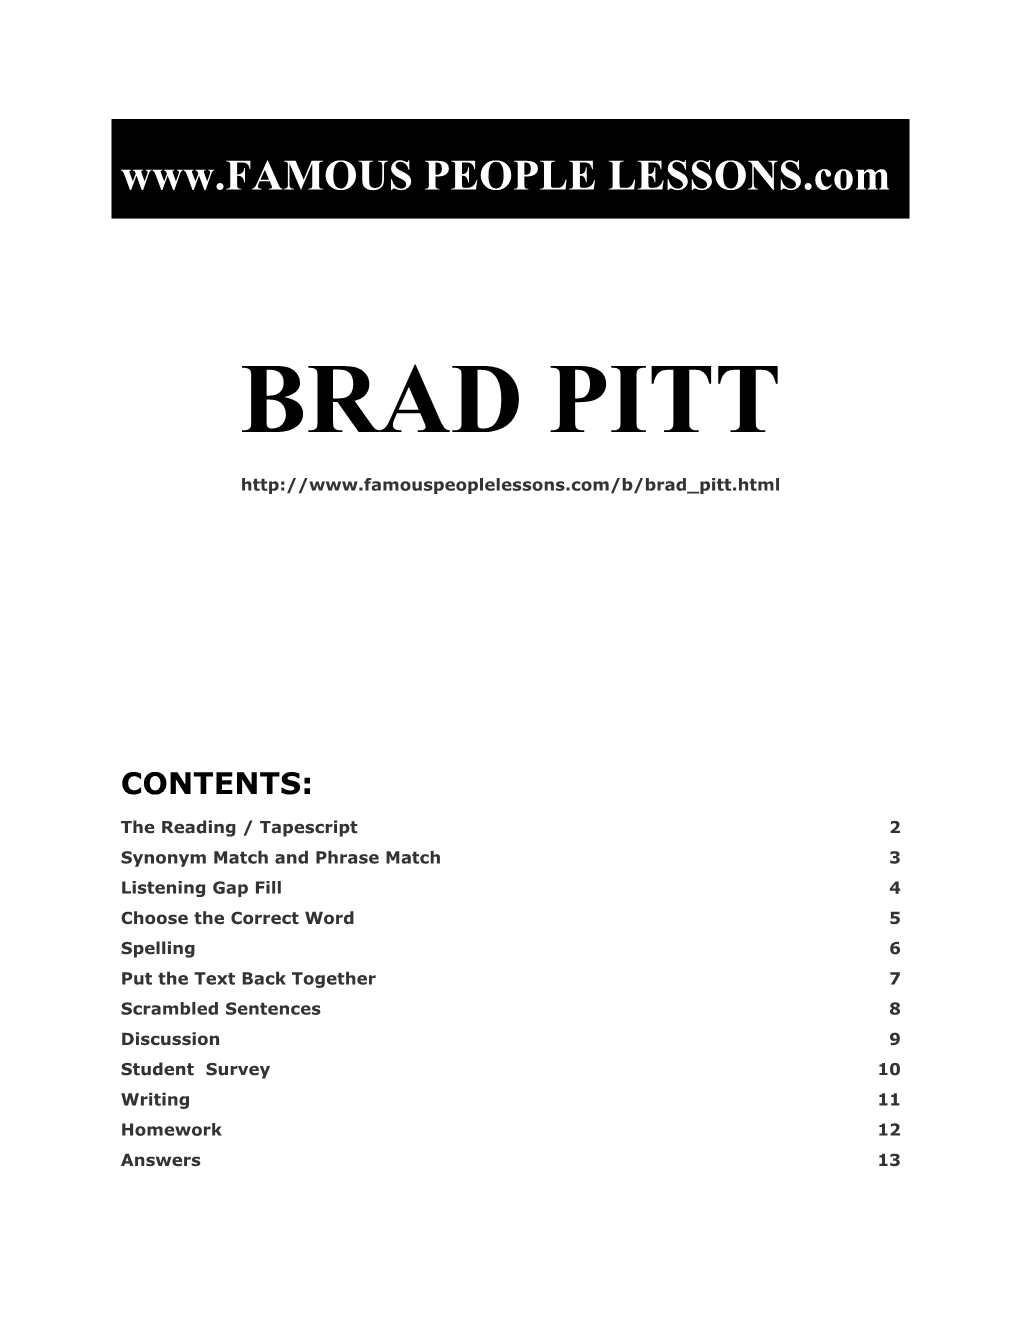 Famous People Lessons - Brad Pitt